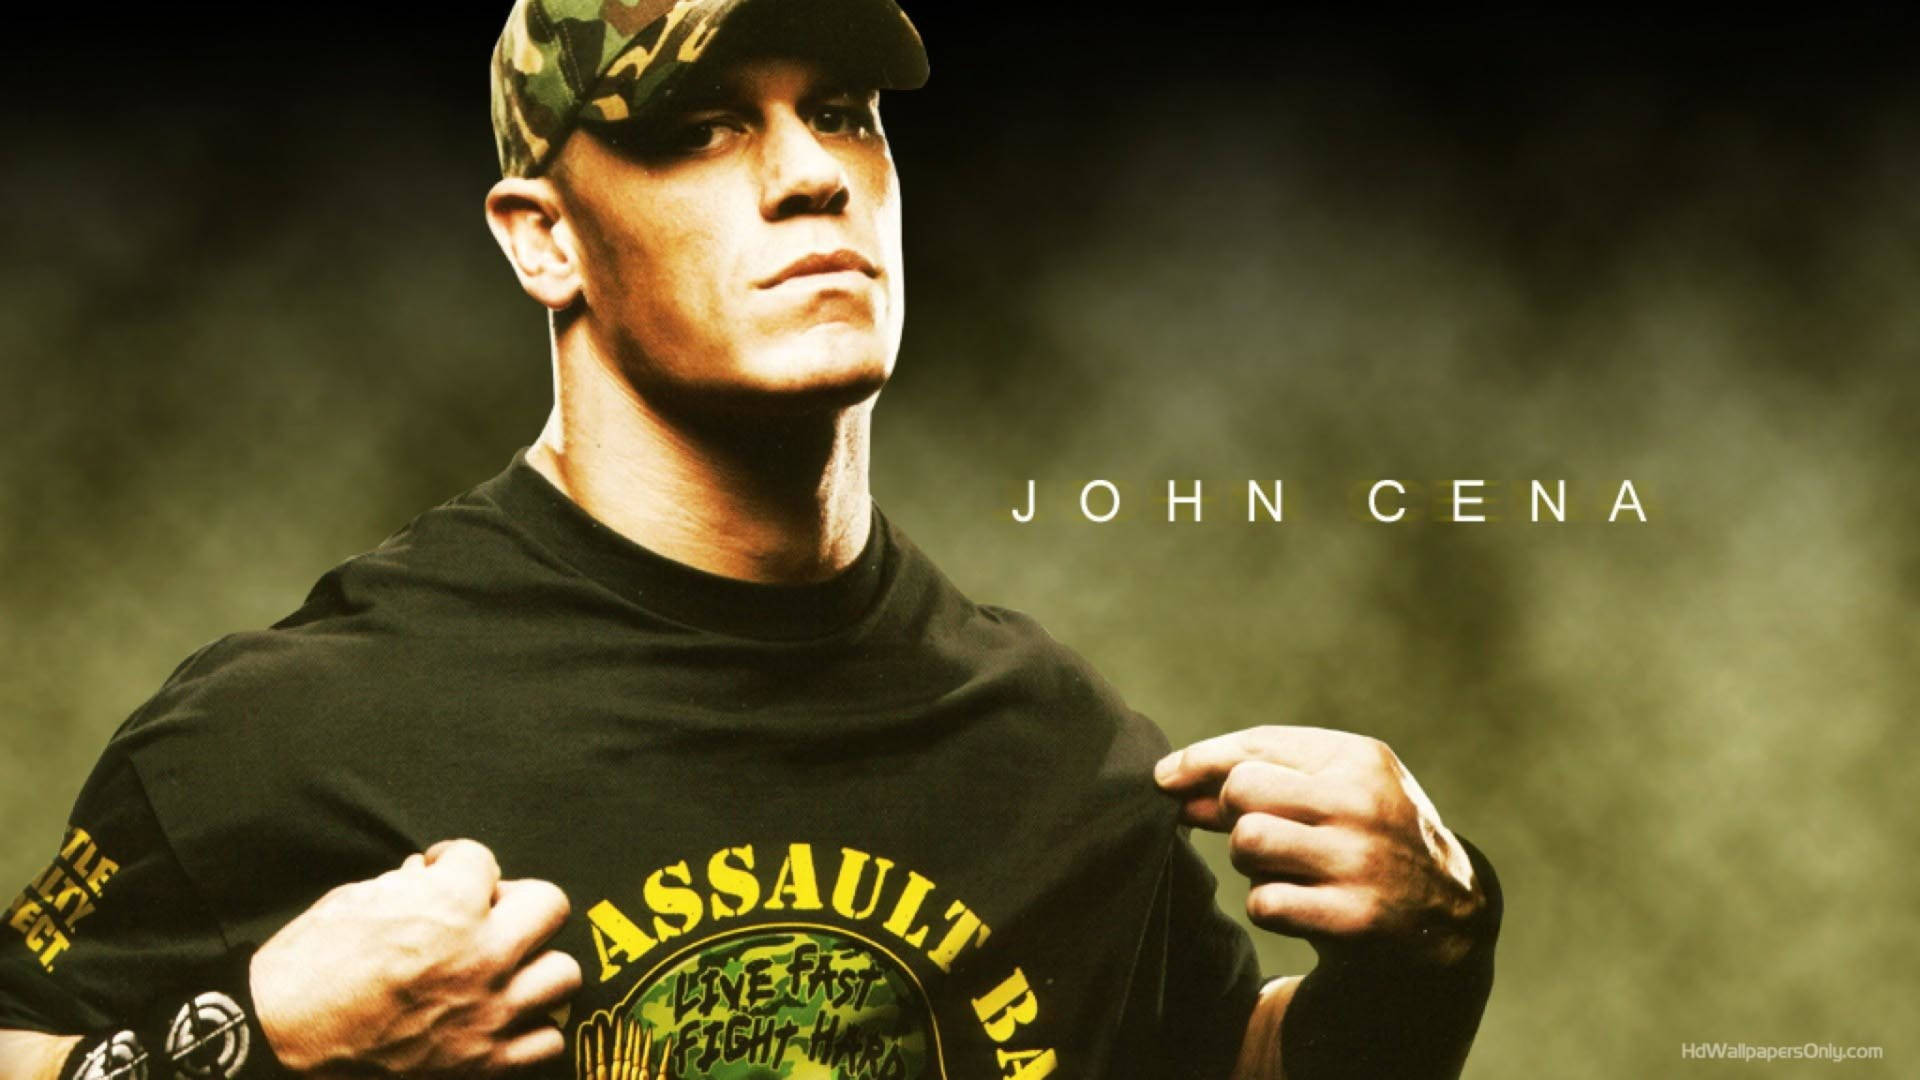 John Cena In Black T-shirt